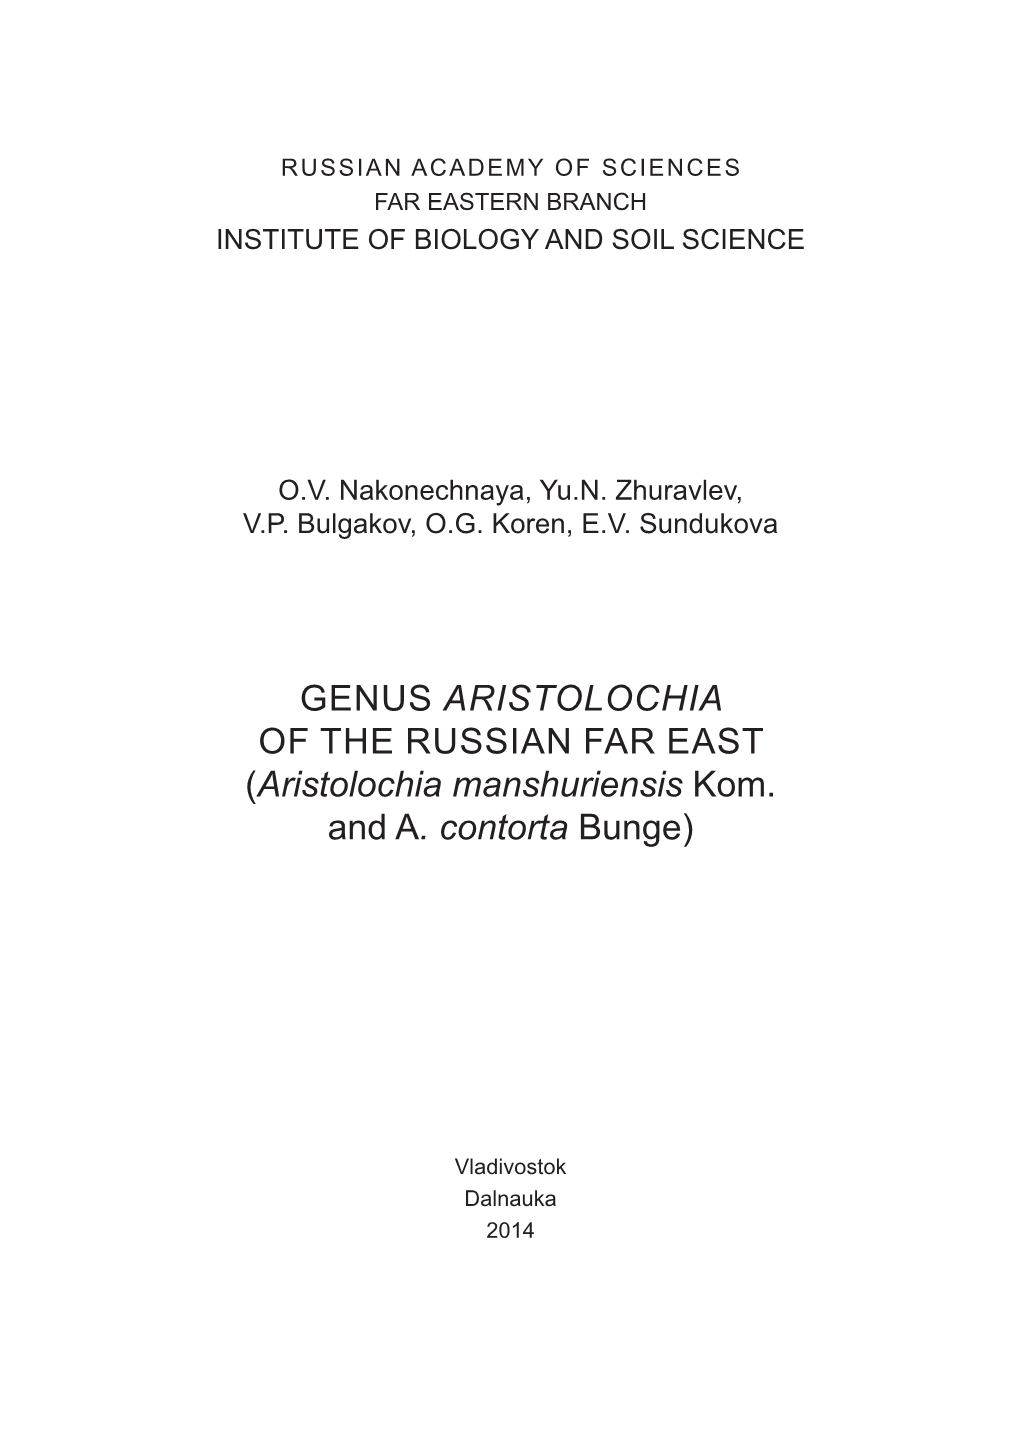 Aristolochia Manshuriensis Kom. and A. Contorta Bunge)